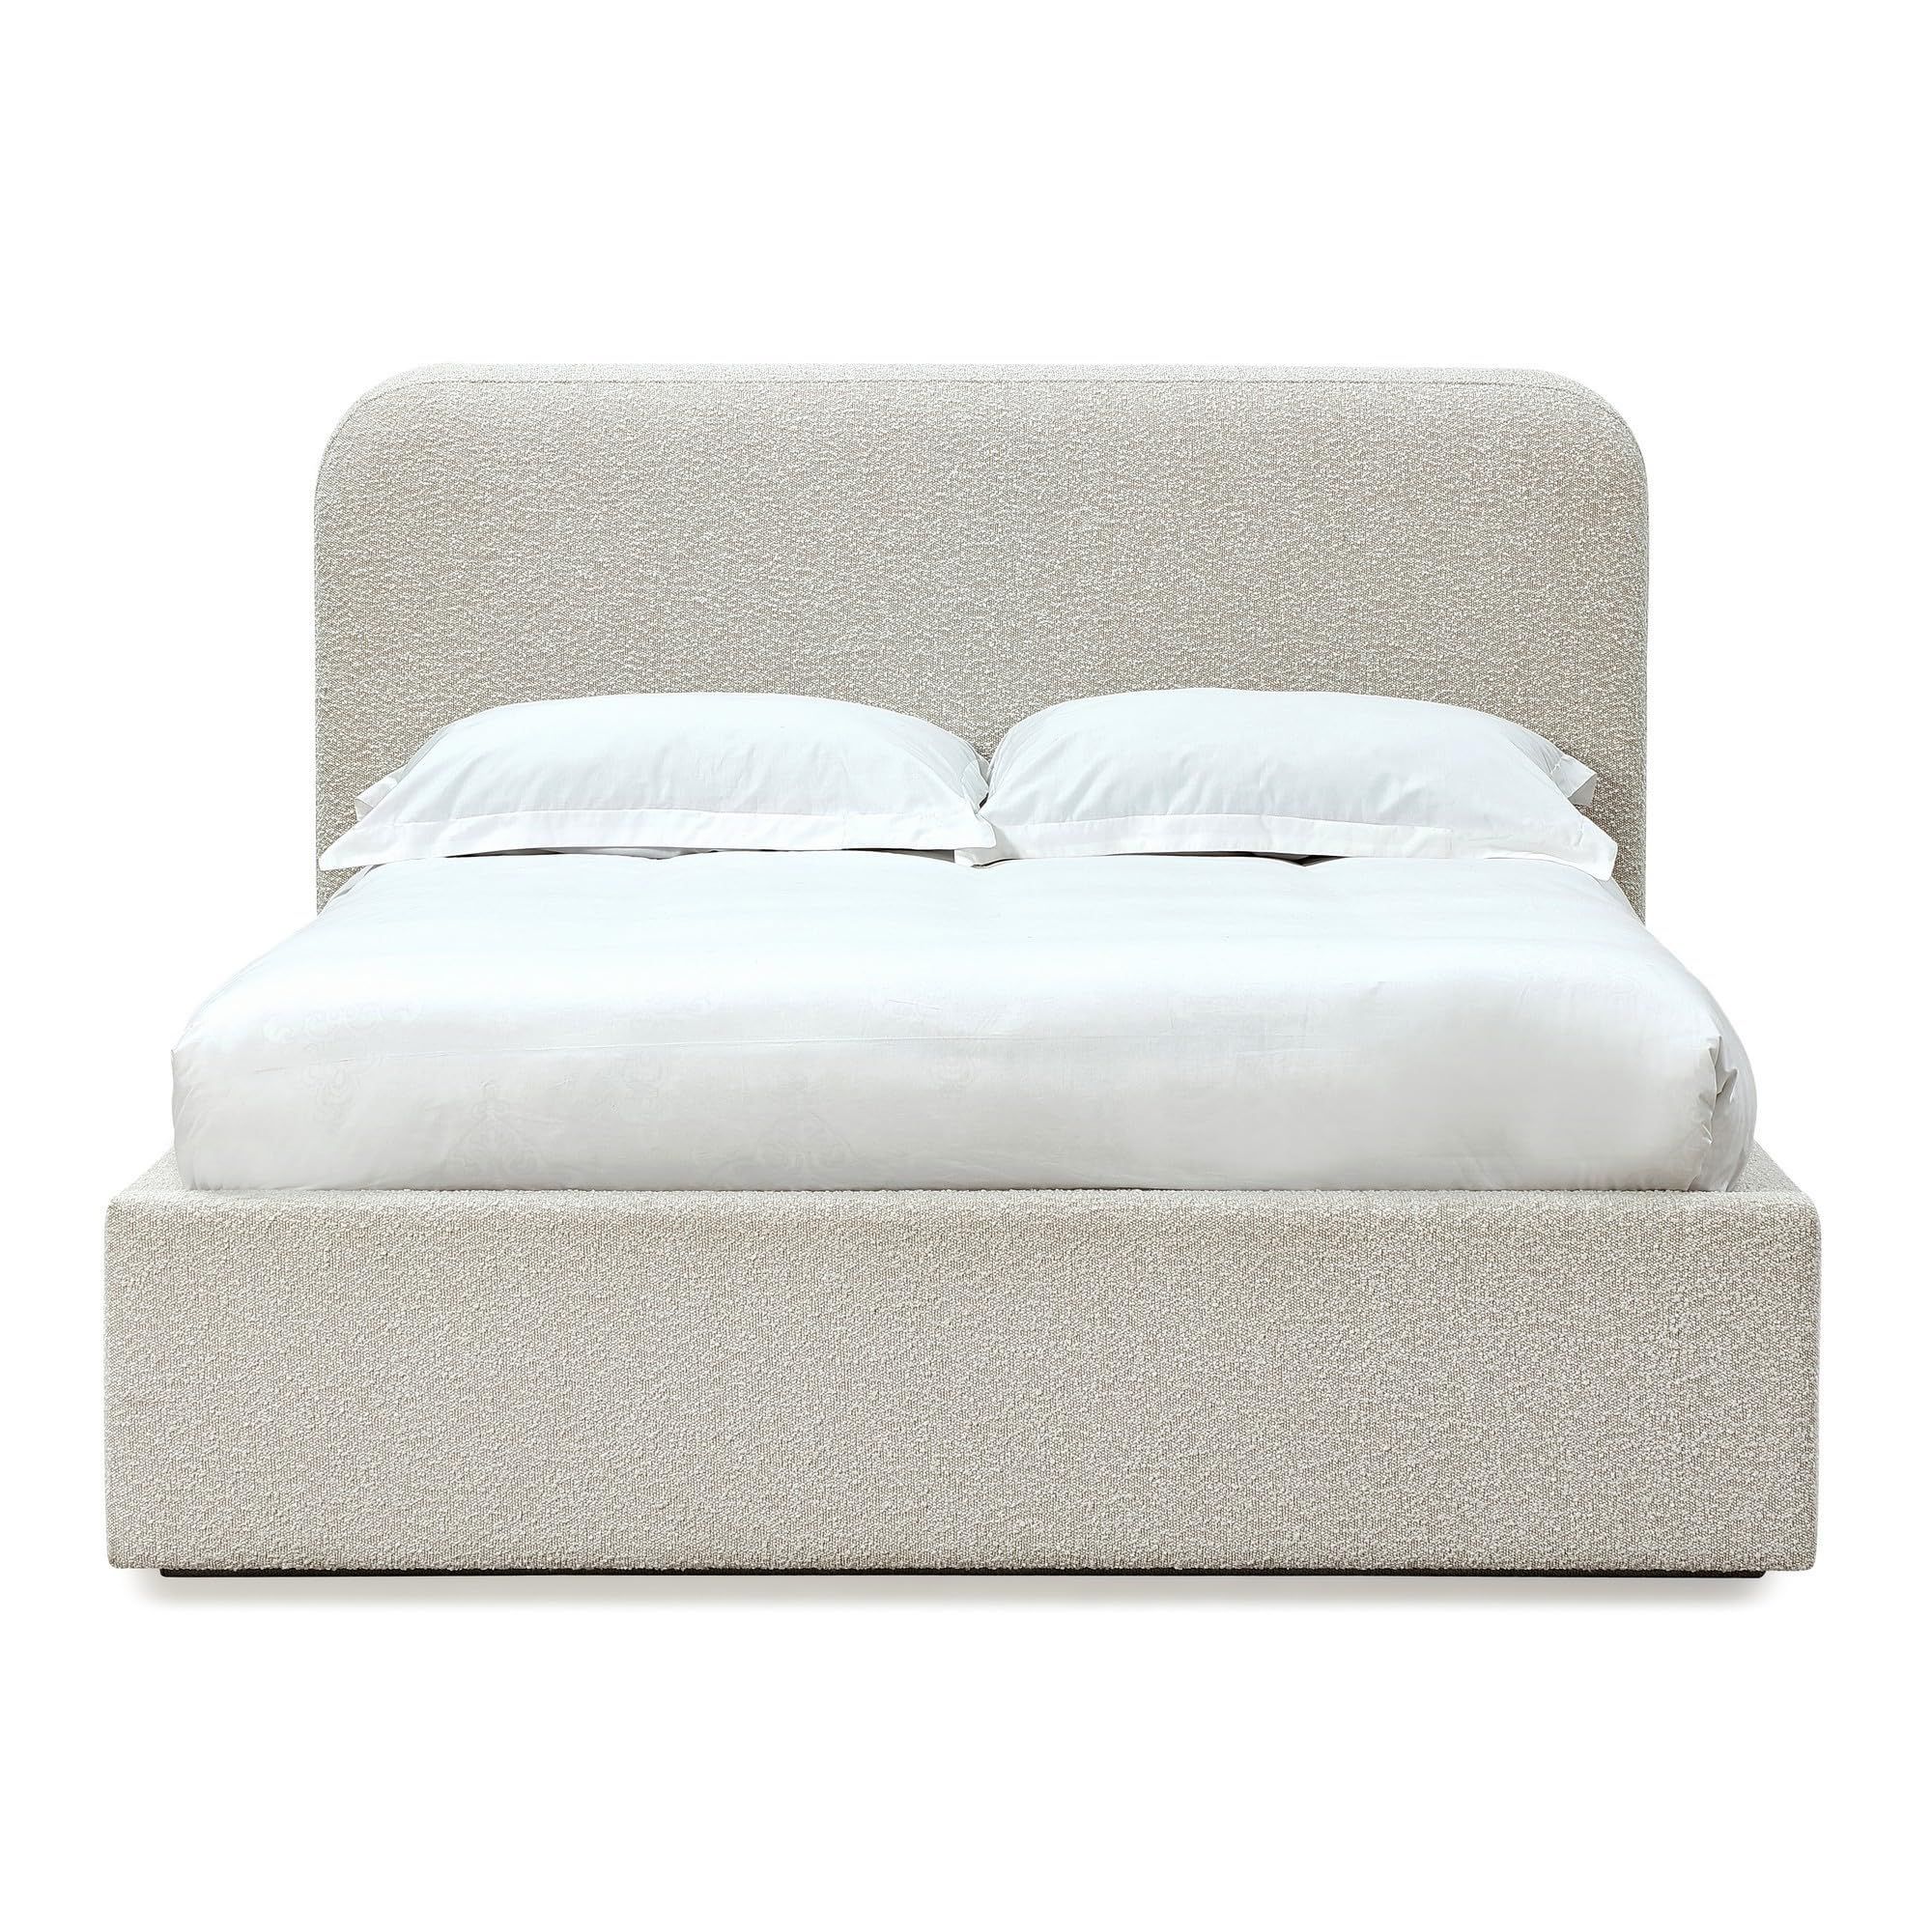 Benjara Ziya California King Bed, Cream Boucle Upholstery, Curved Panel Headboard | Amazon (US)